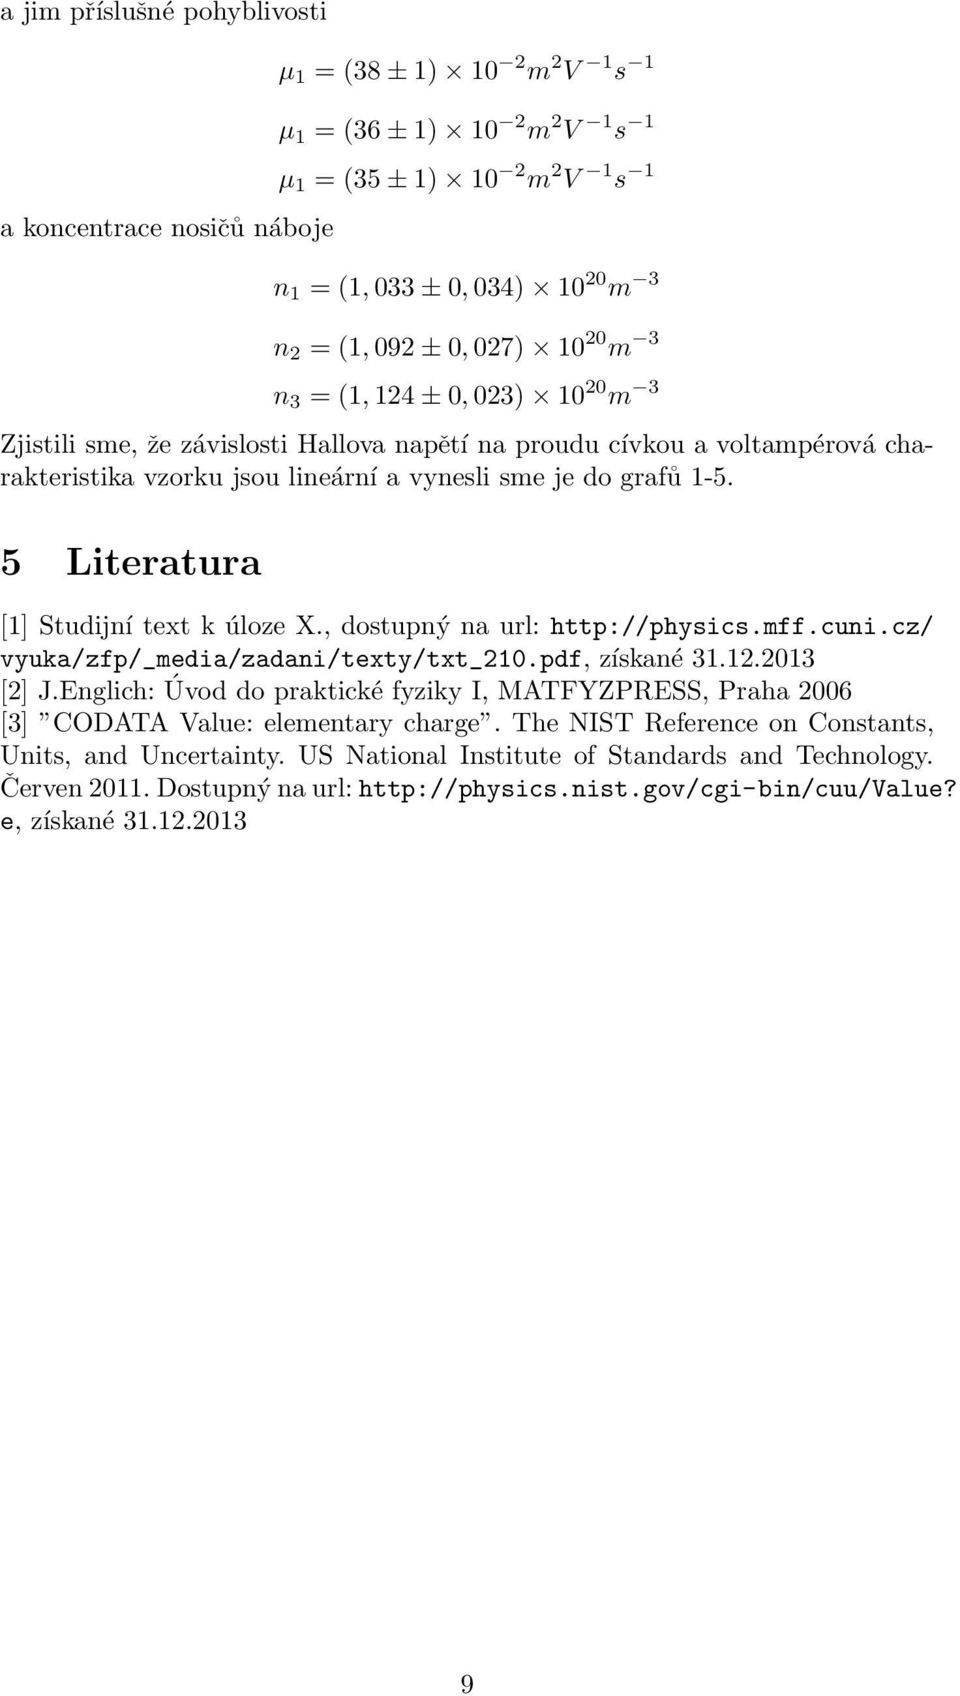 5 Literatura [1] Studijní text k úloze X., dostupný na url: http://physics.mff.cuni.cz/ vyuka/zfp/_media/zadani/texty/txt_210.pdf, získané 31.12.2013 [2] J.